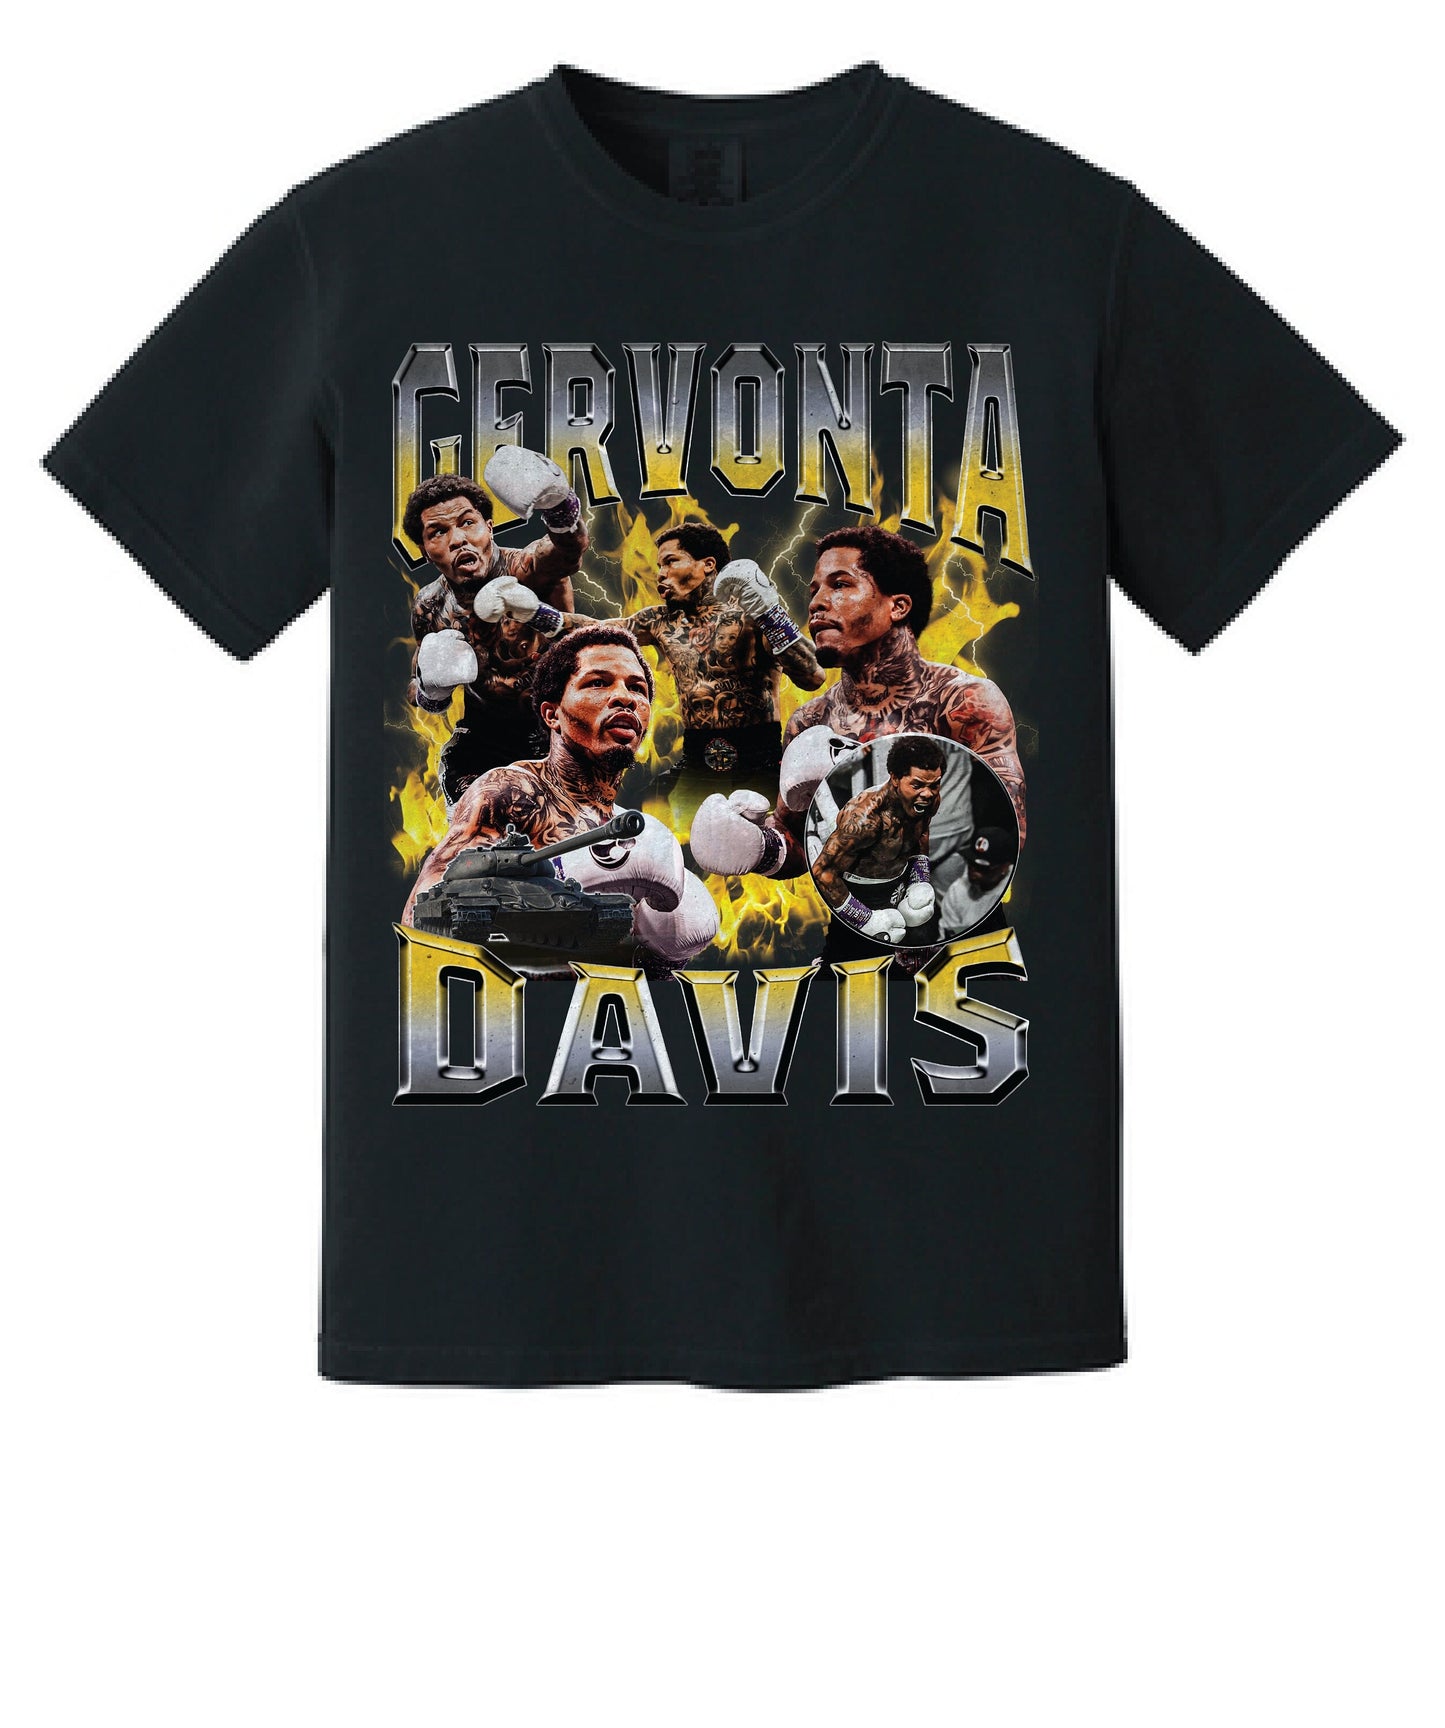 Vintage 90's Bootleg Gervonta "Tank" Davis T-shirt - Boxing Legend Retro Tee